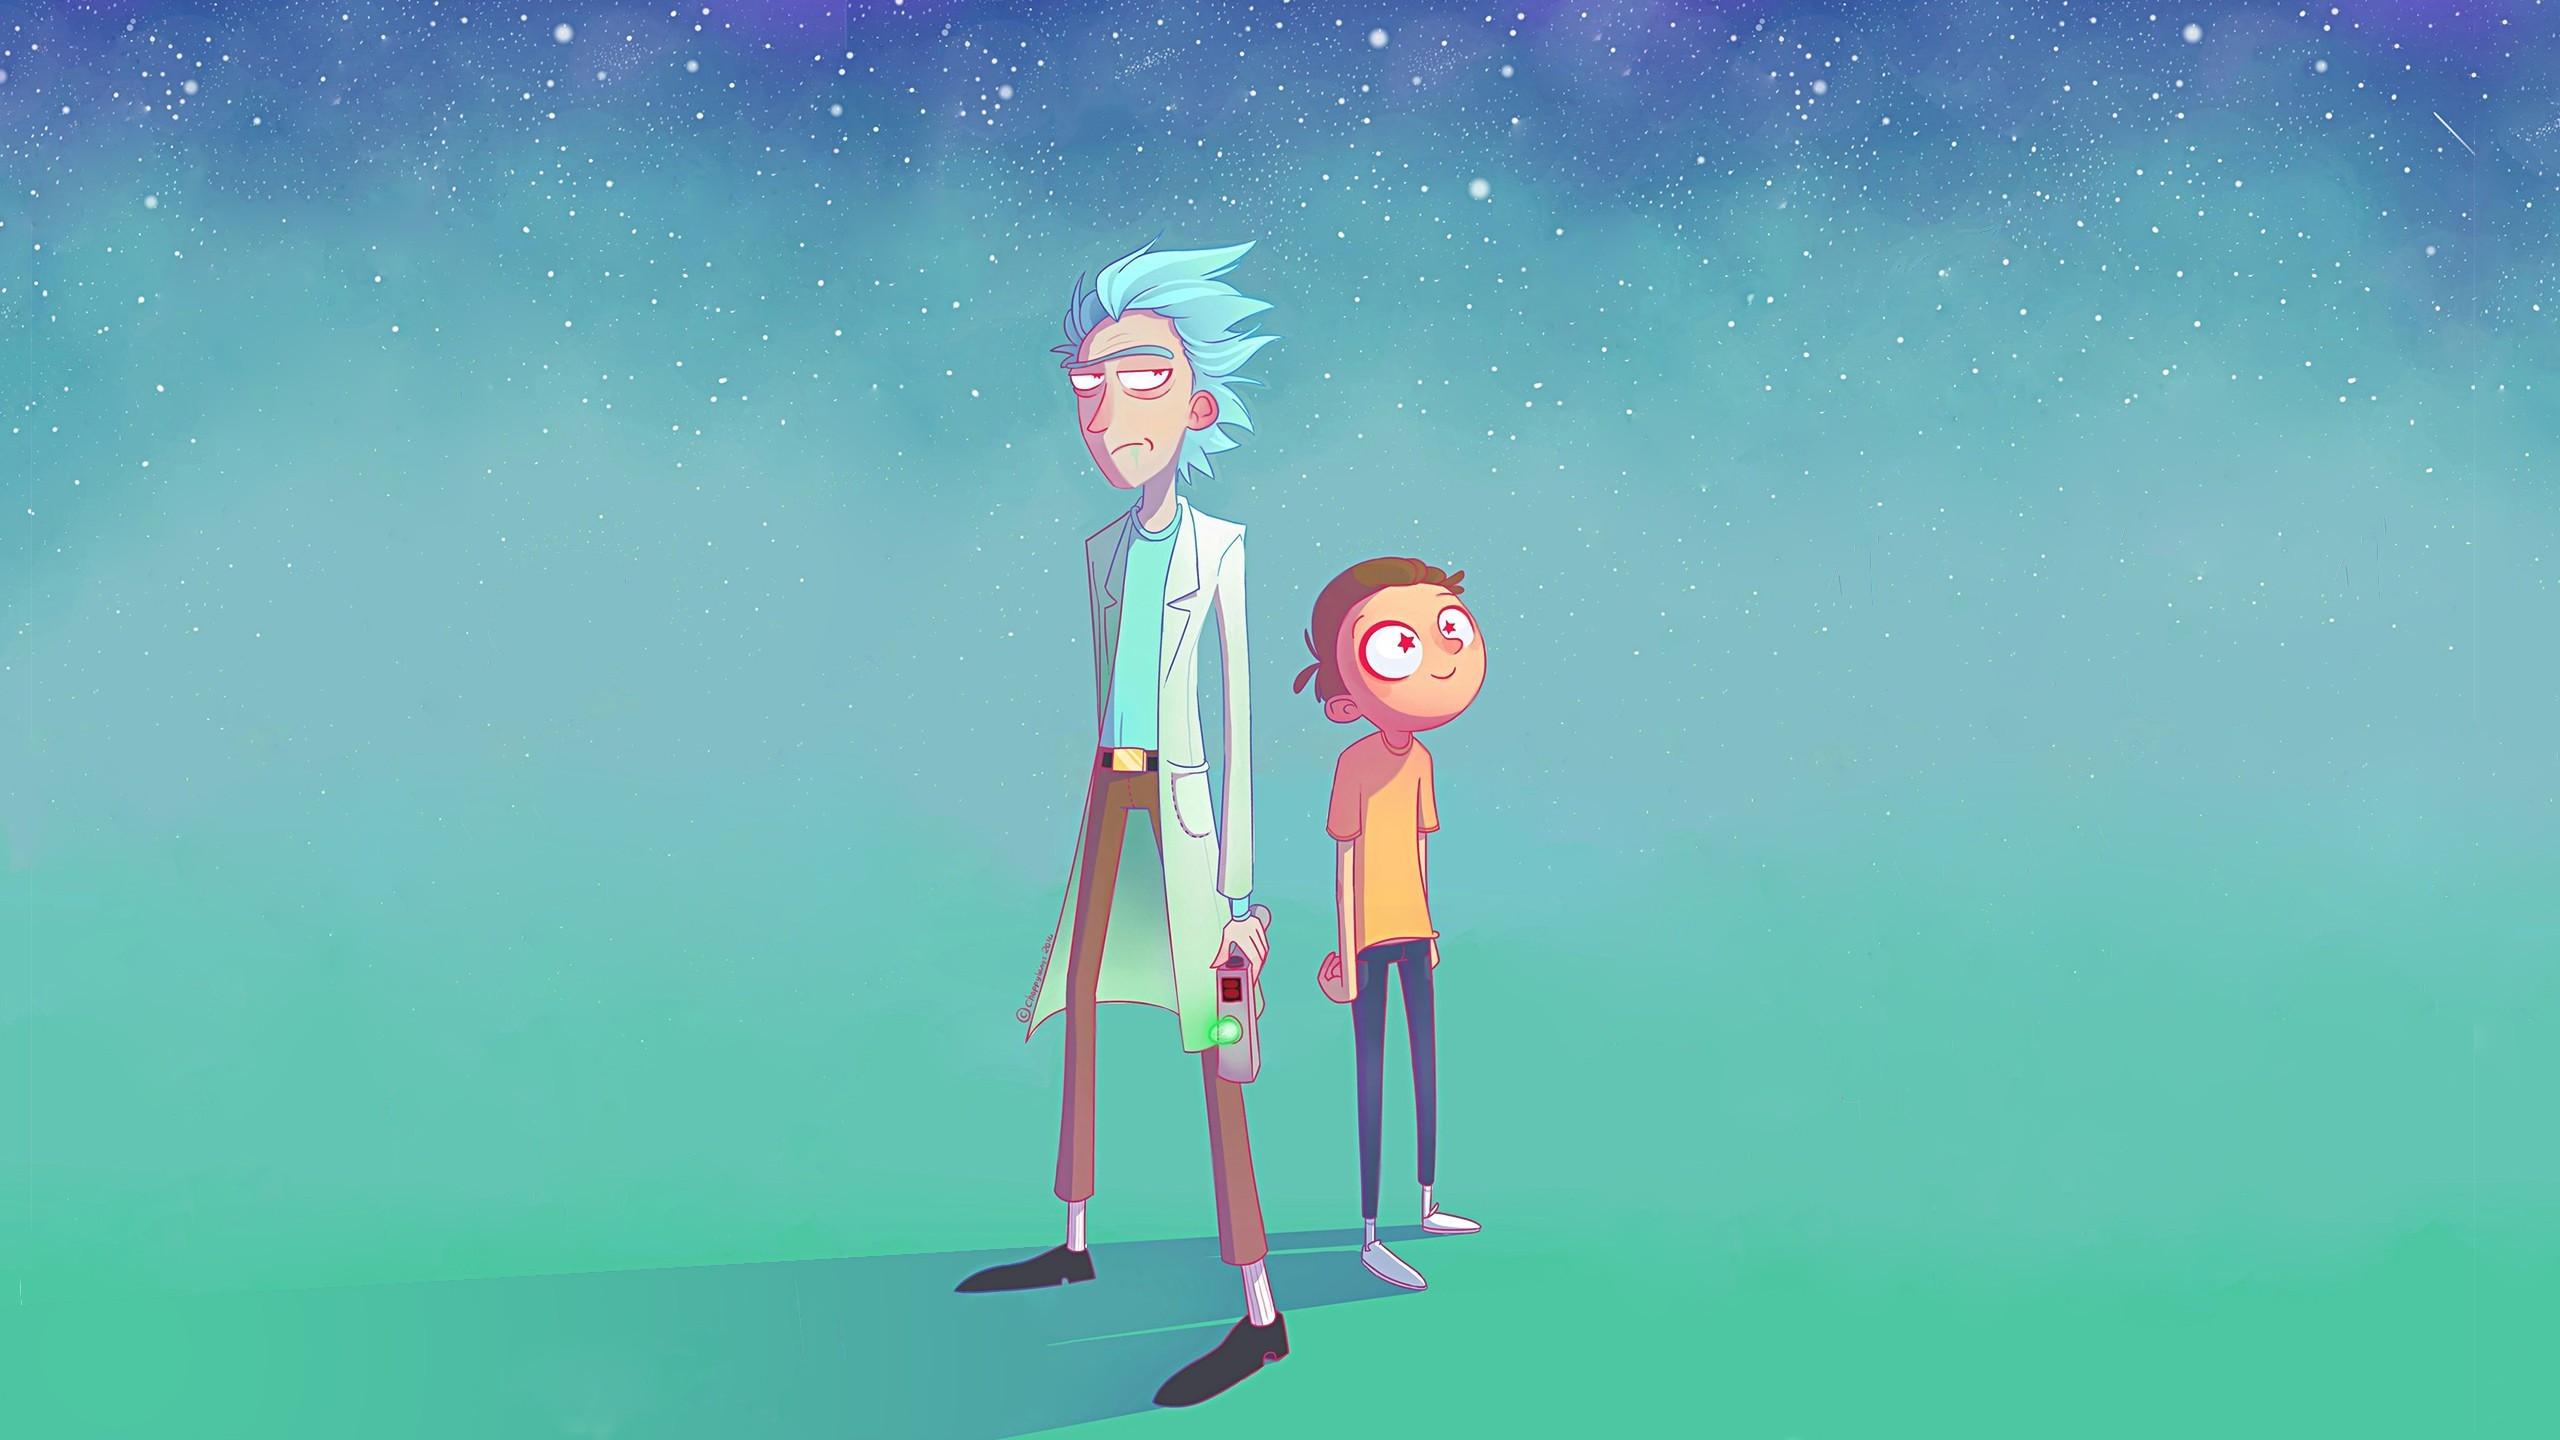 Rick and Morty Season 3 Wallpaper